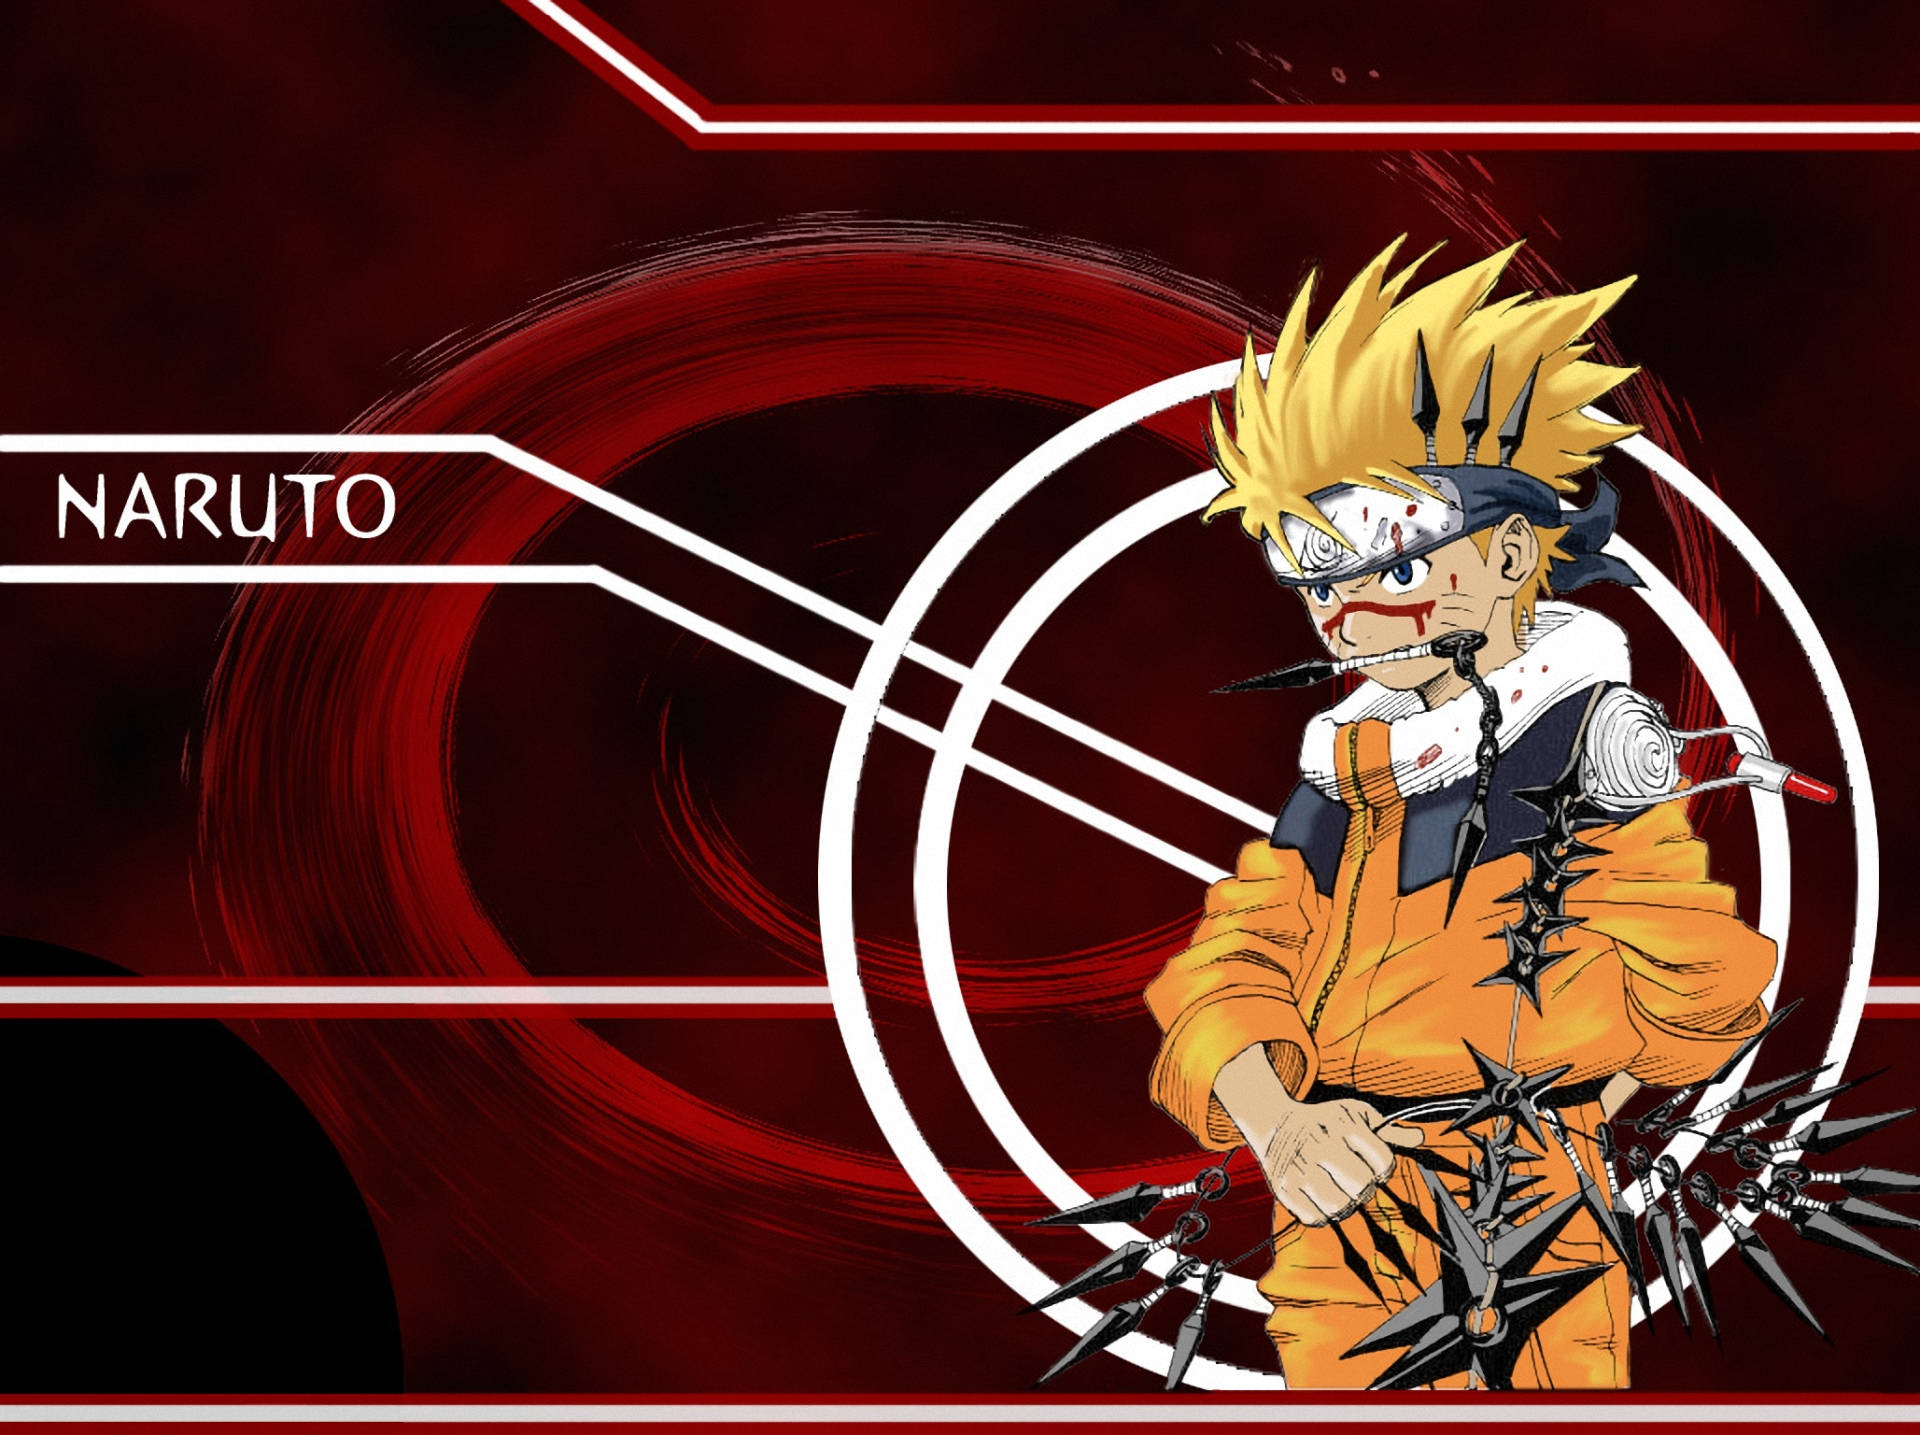 Moving Naruto Blades Background